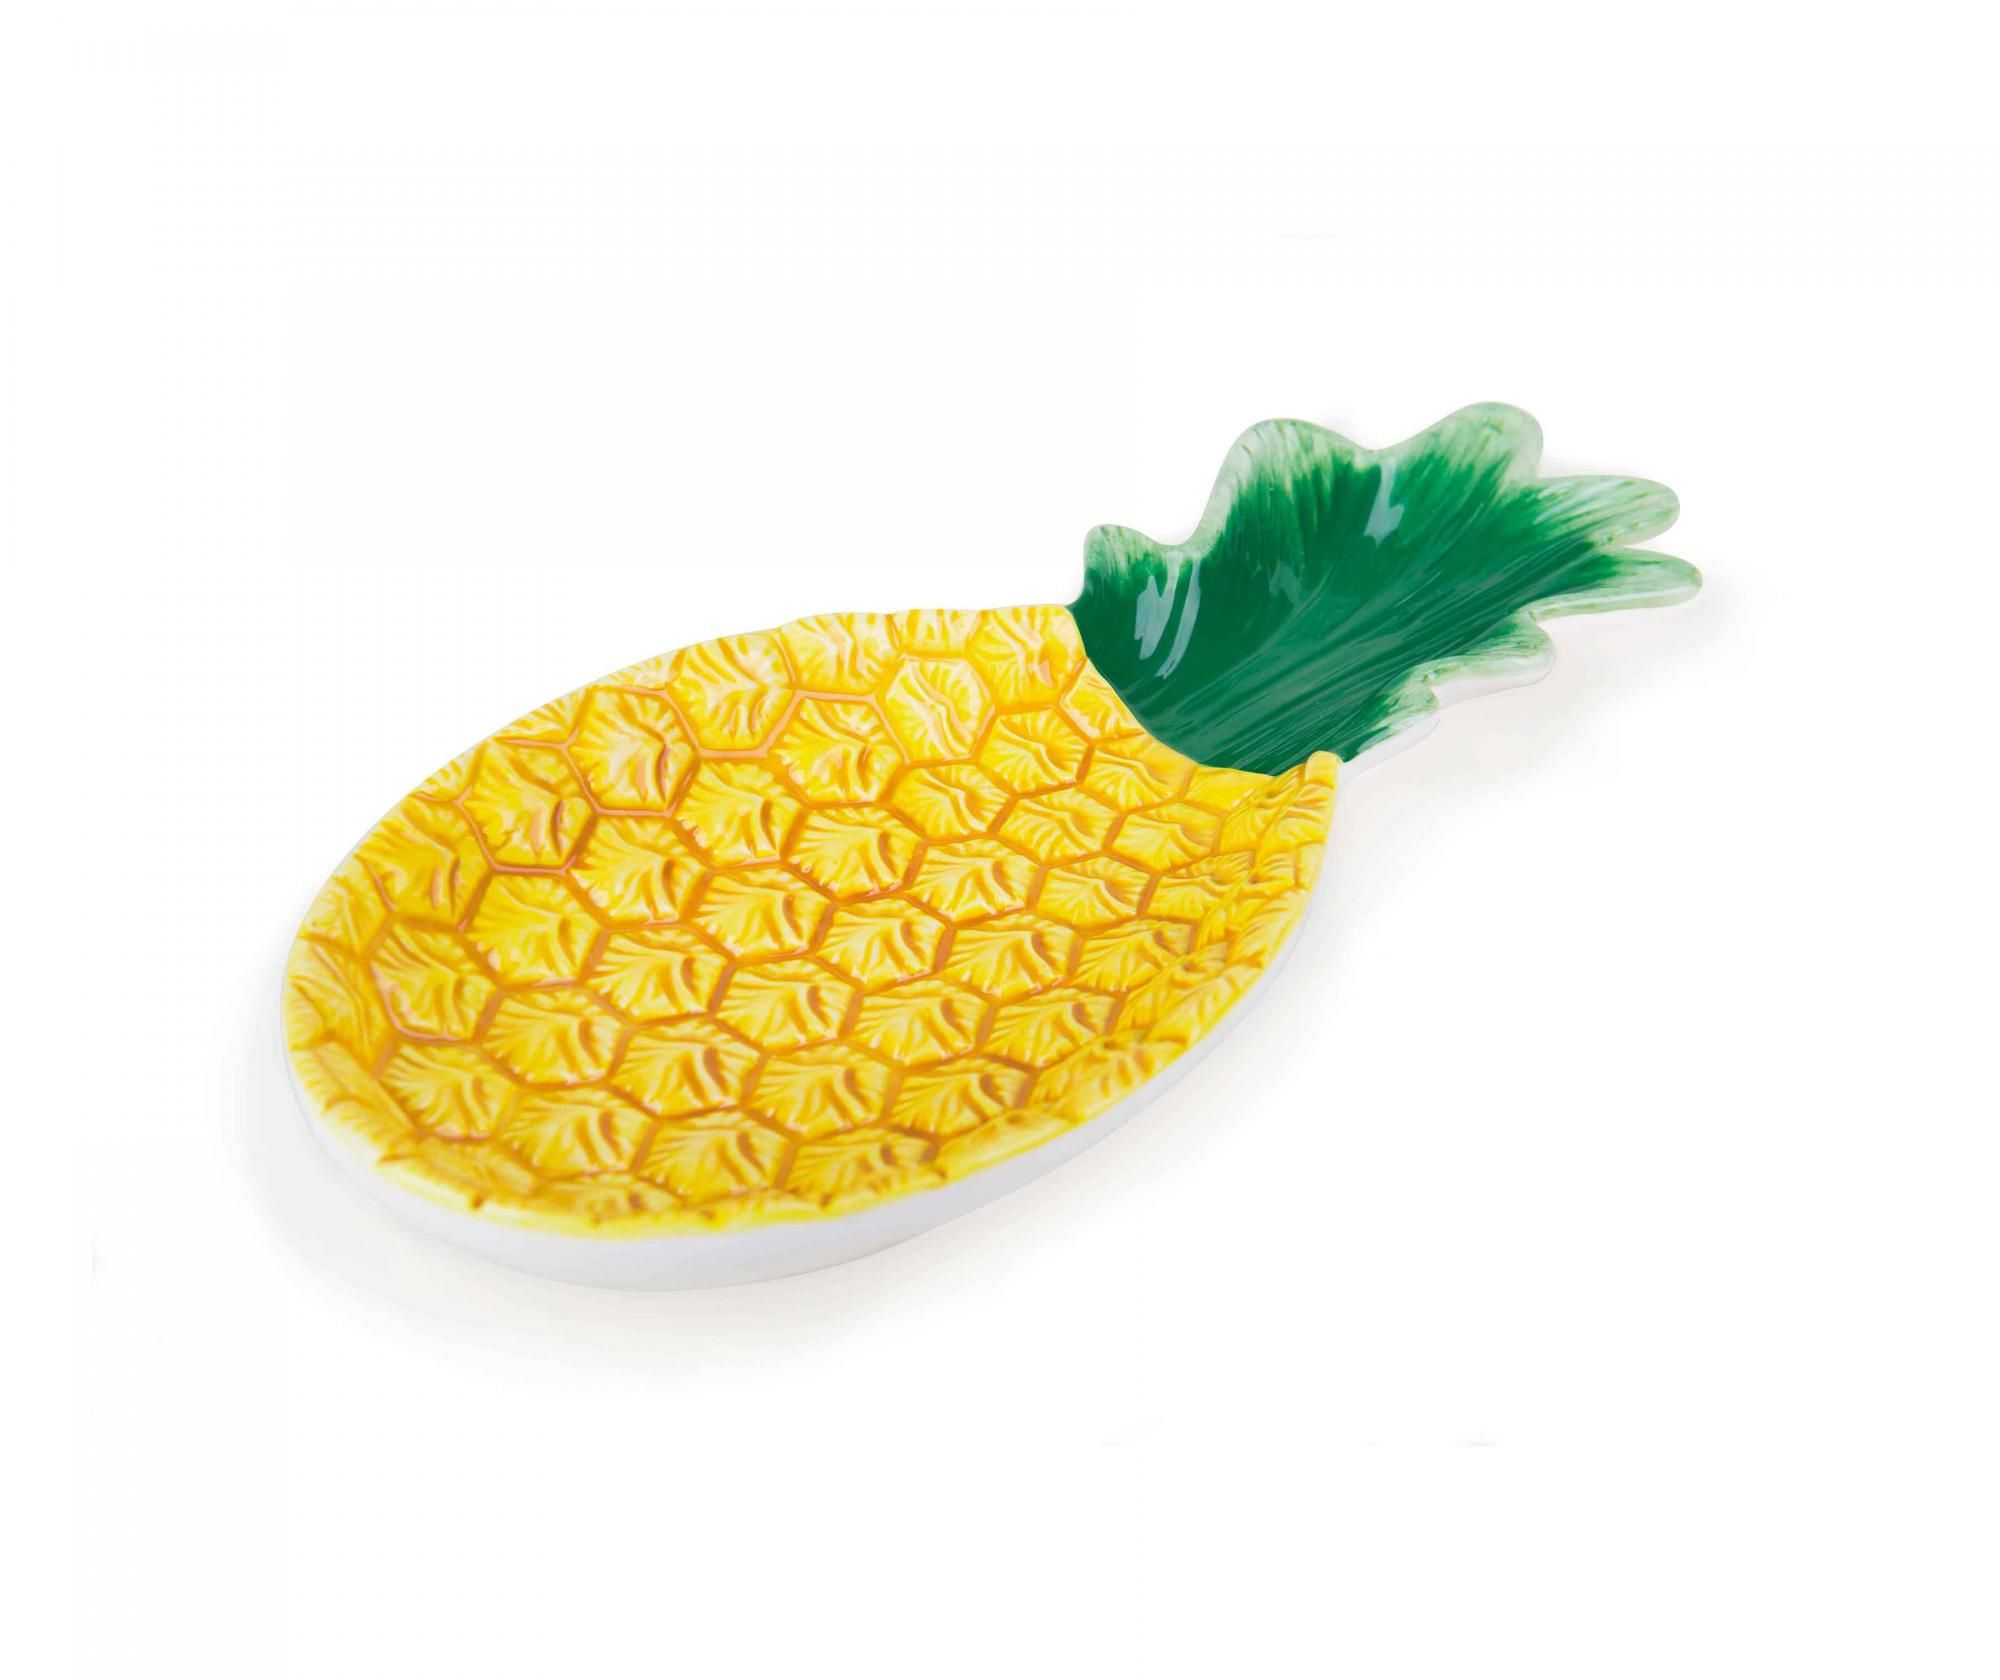 Suport pentru lingura Pineapple – Excelsa, Galben & Auriu Excelsa